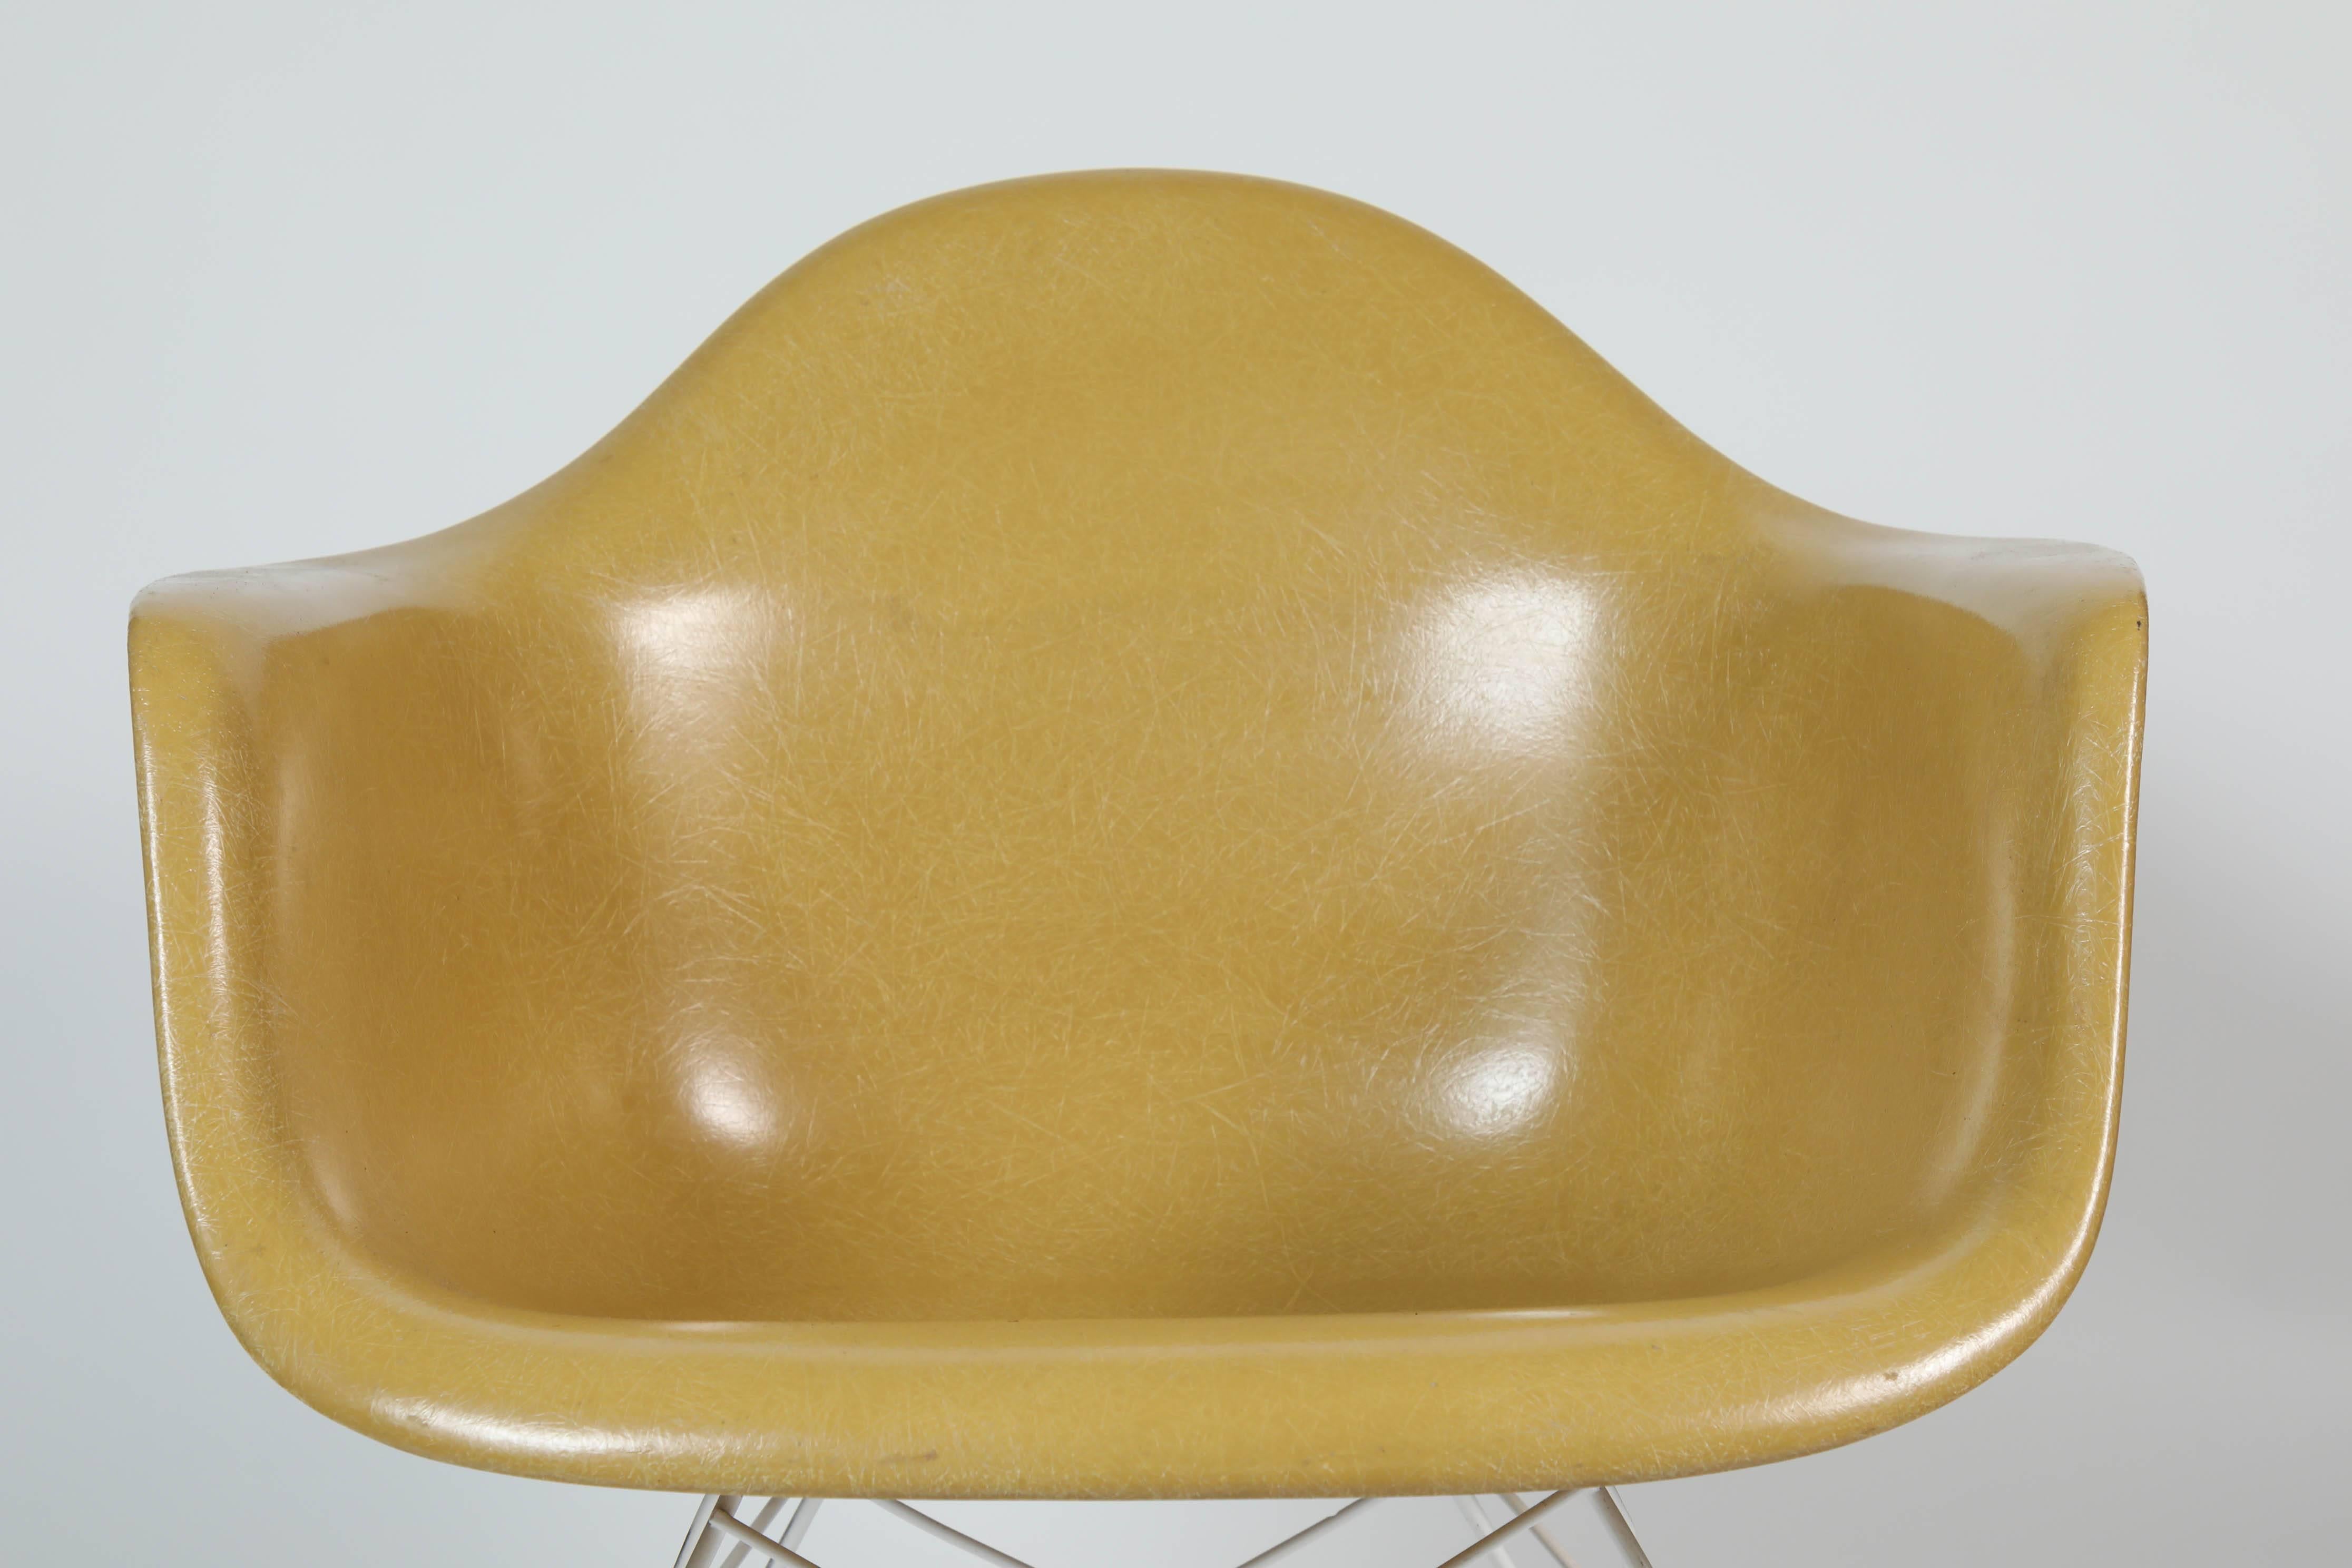 Restored pair of Eames Herman Miller fiberglass shell armchairs with metal Eiffel tower base. Original Herman Miller mark on bottom.